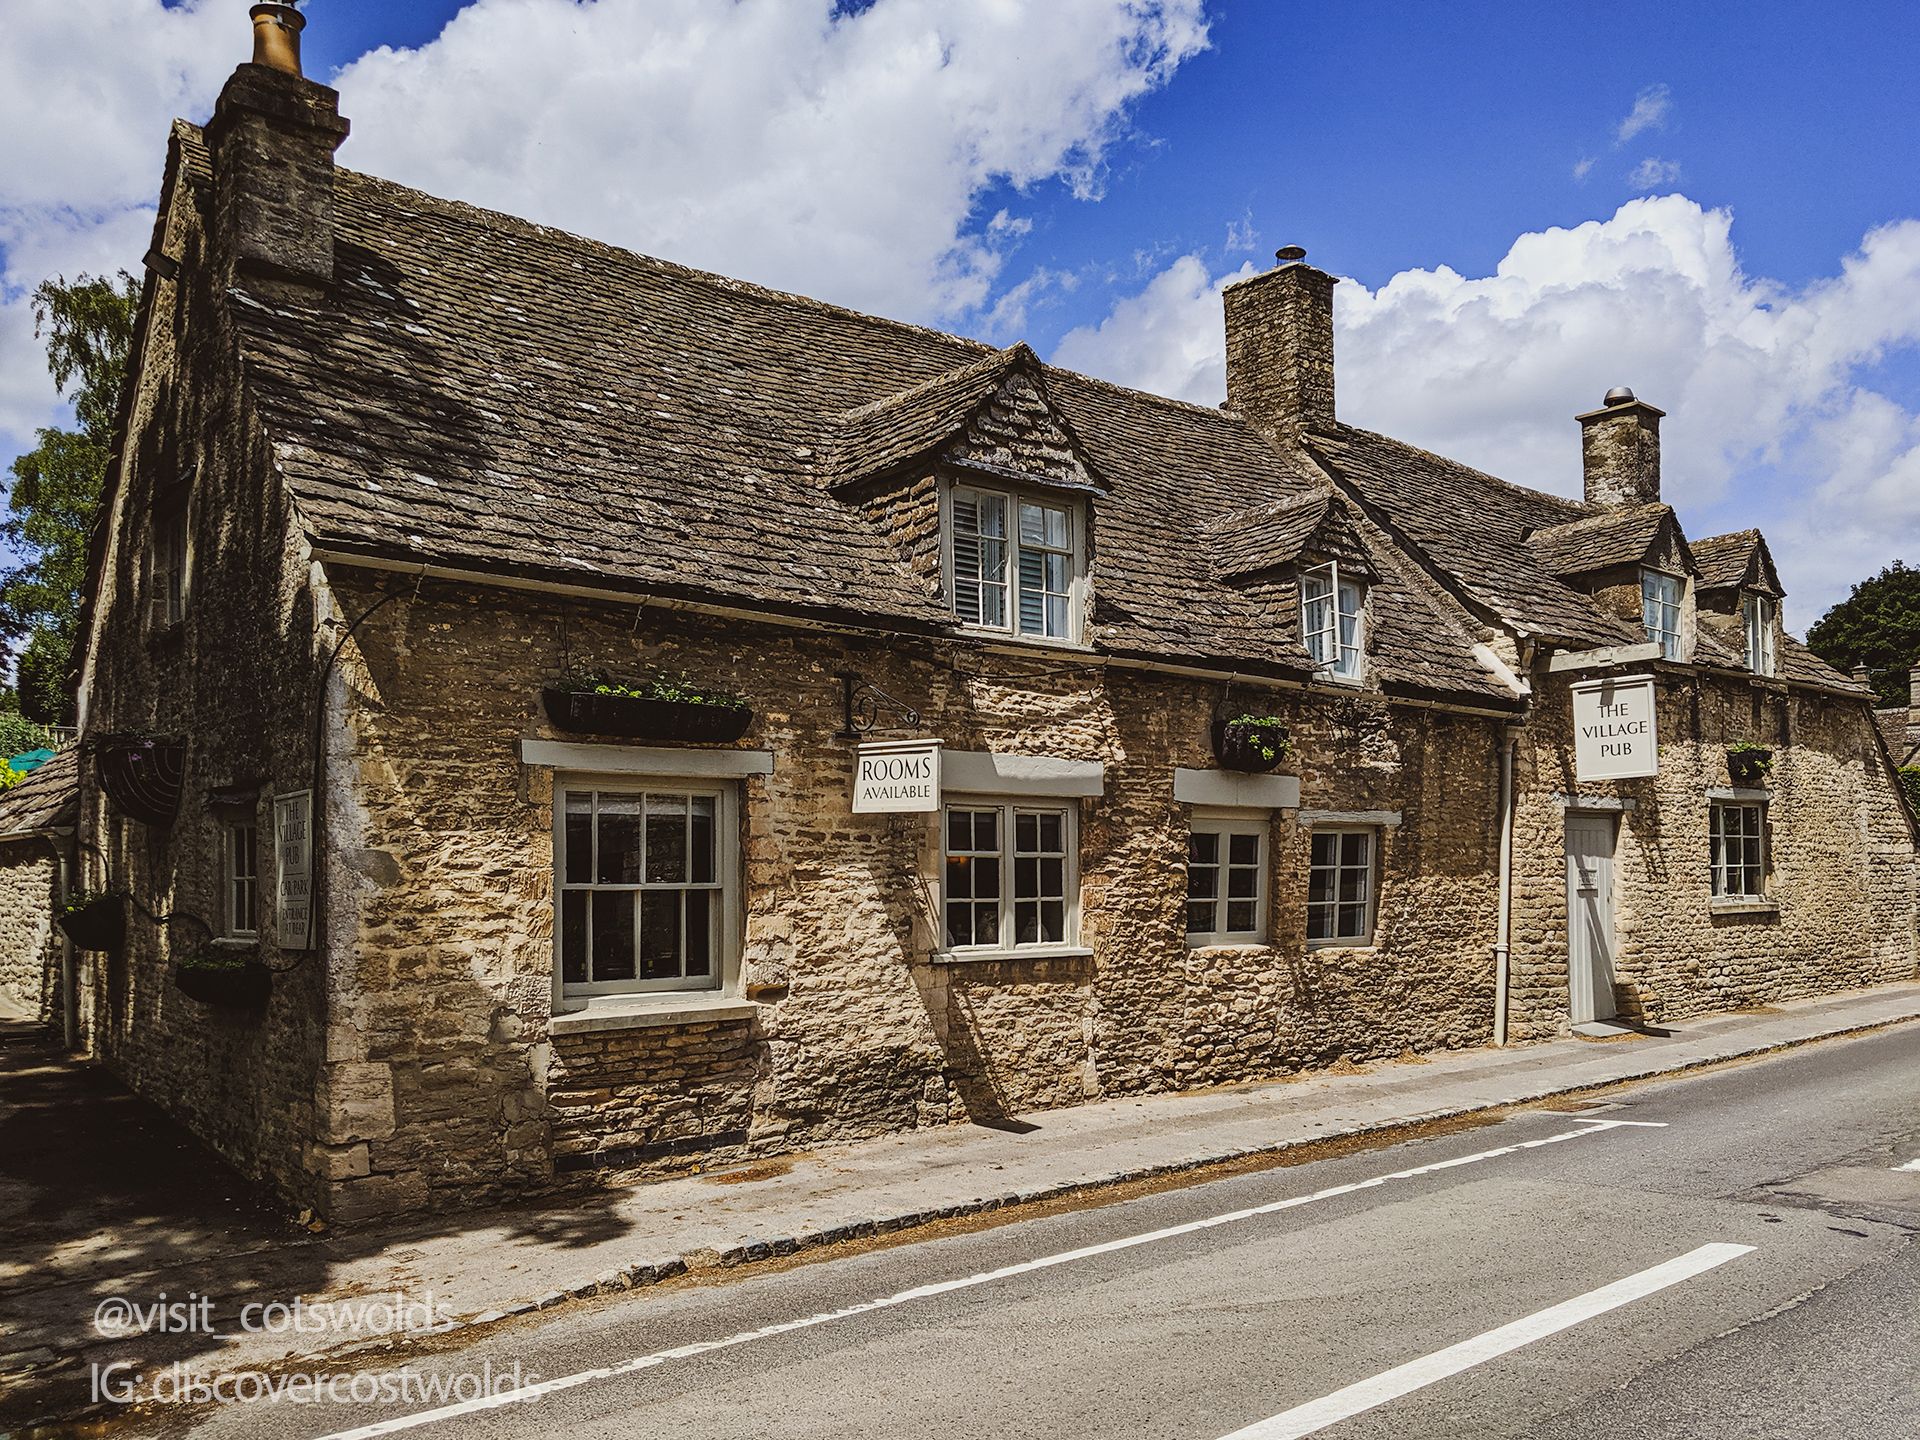 The Village pub, Barnsley, Gloucestershire